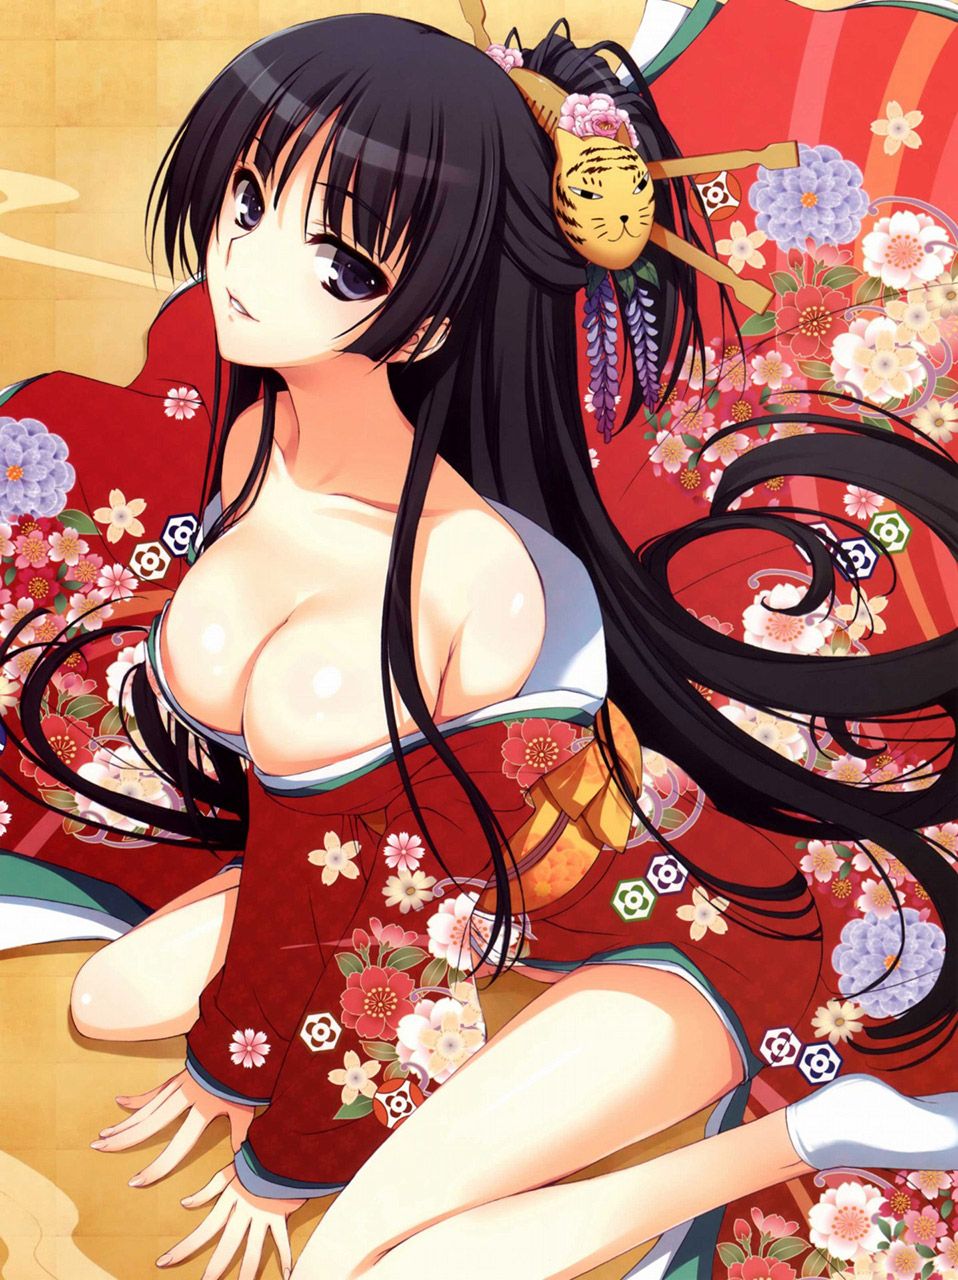 2D Japanese Traditional Erotic! Erotic image summary 67 sheets that you want to enjoy peeling the kimono 6